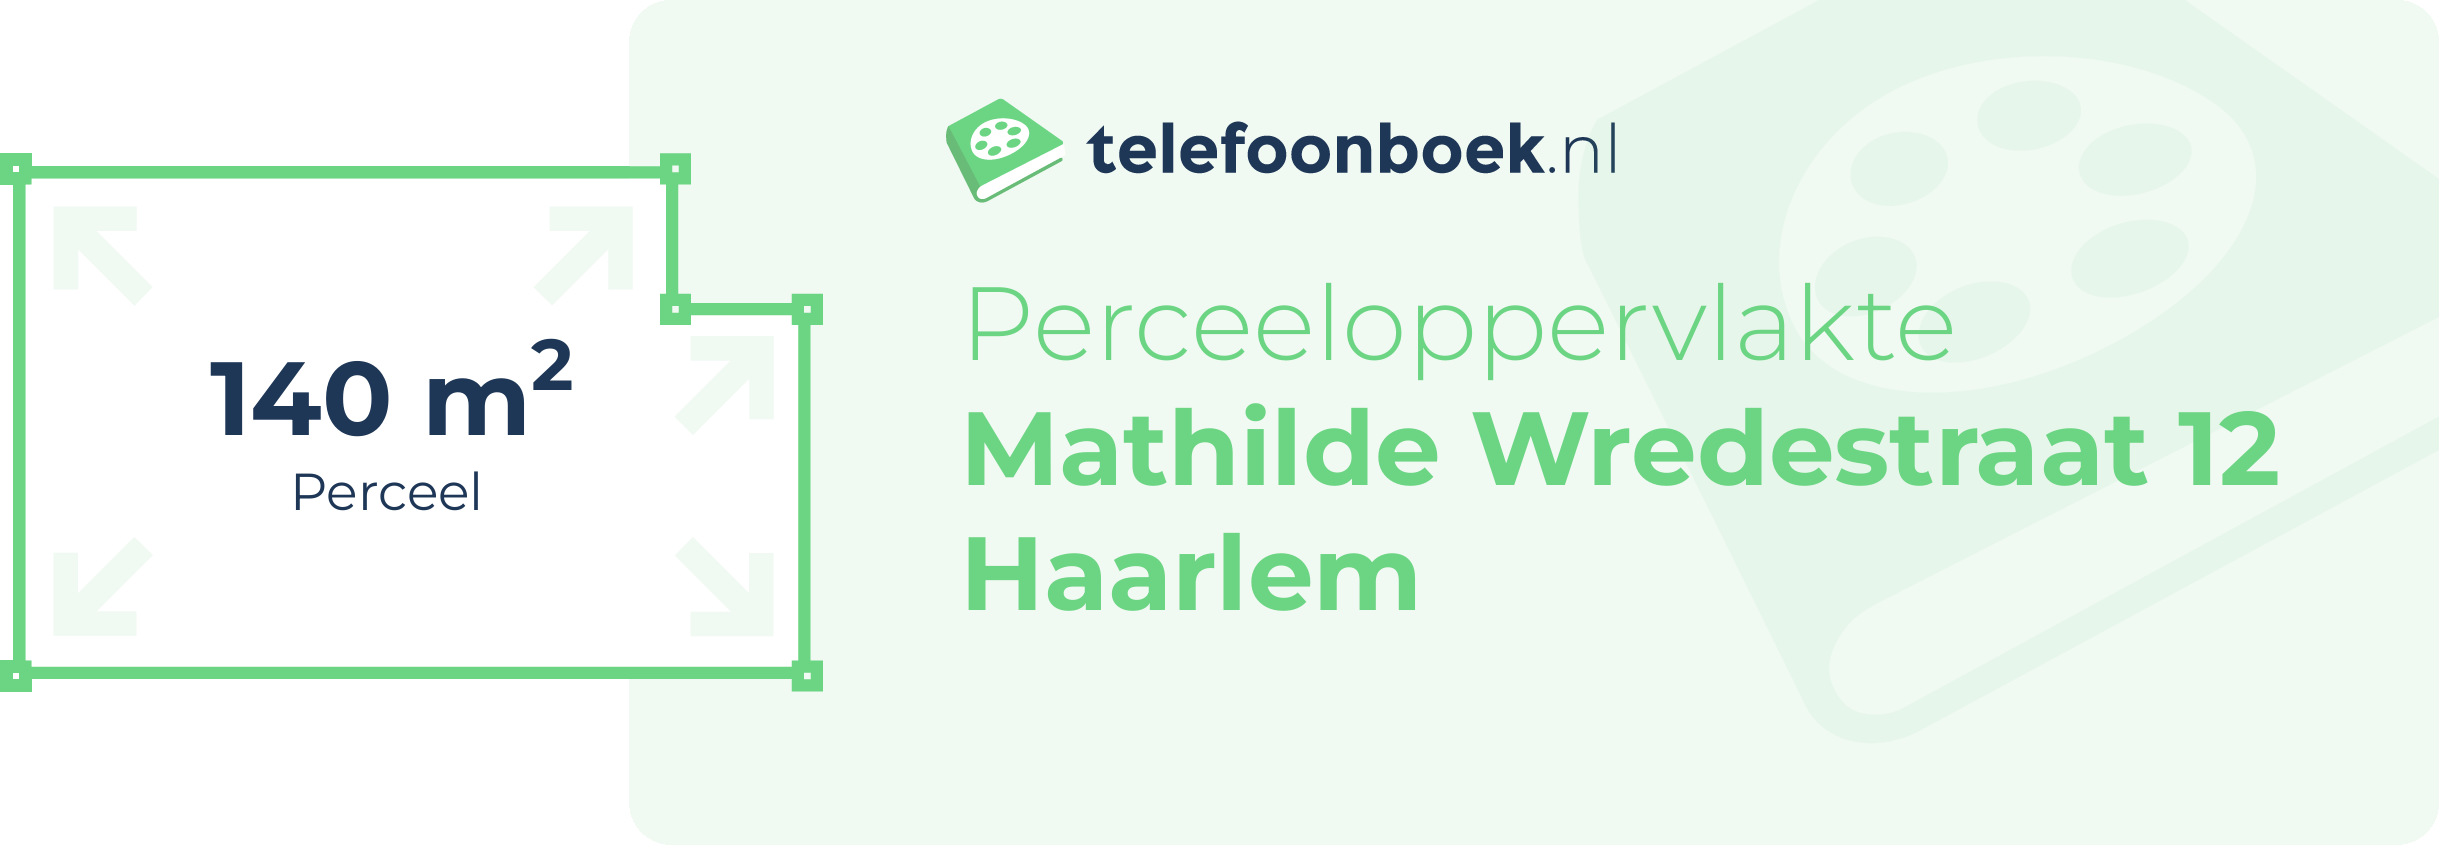 Perceeloppervlakte Mathilde Wredestraat 12 Haarlem